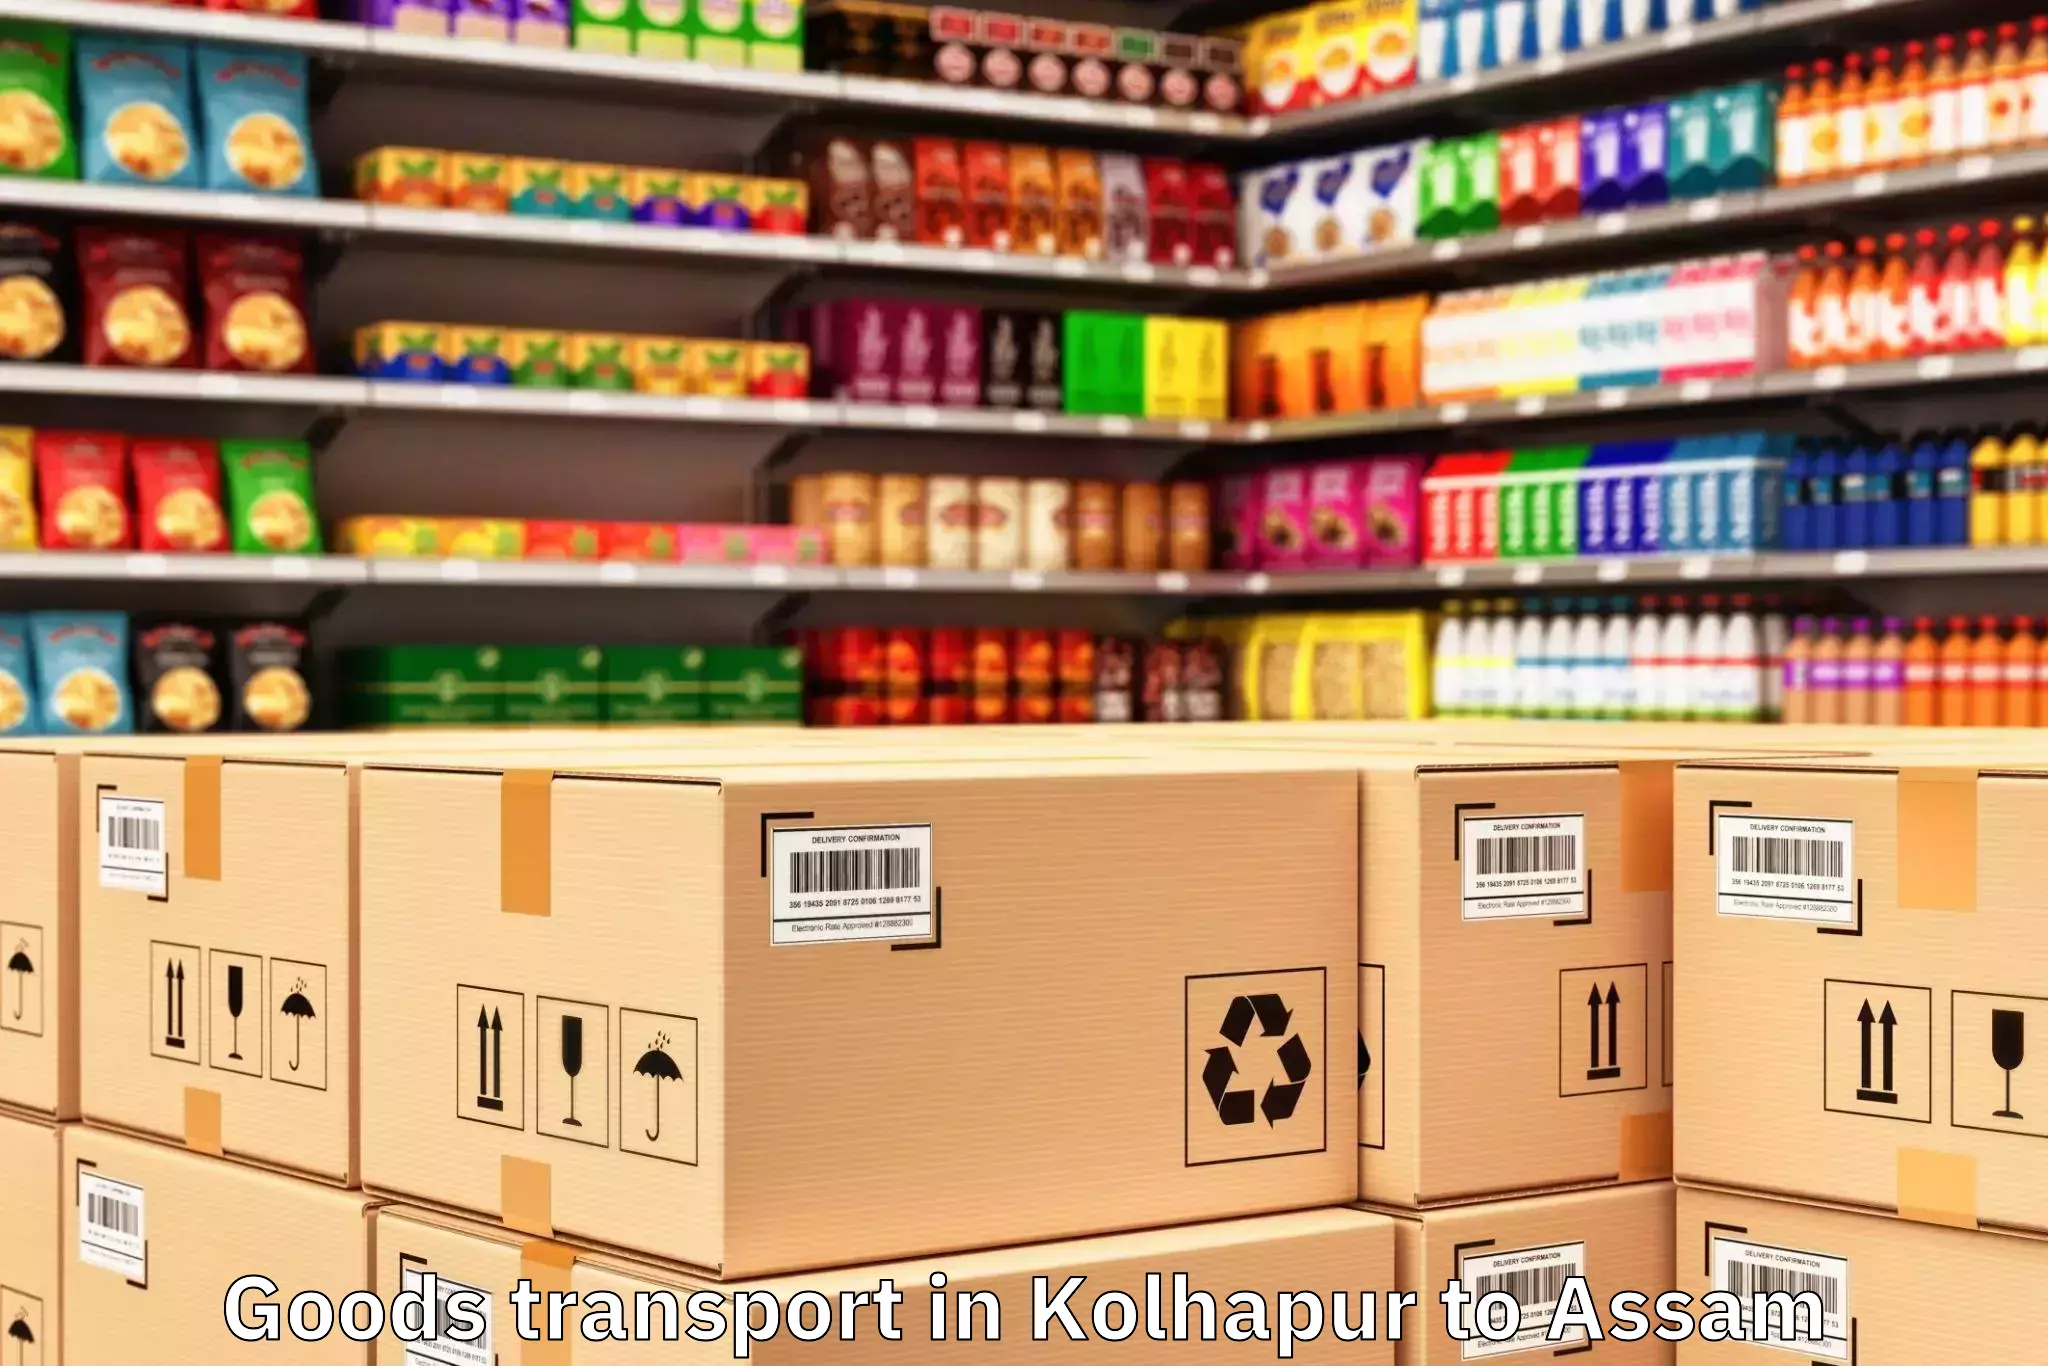 Comprehensive Kolhapur to Iit Guwahati Goods Transport